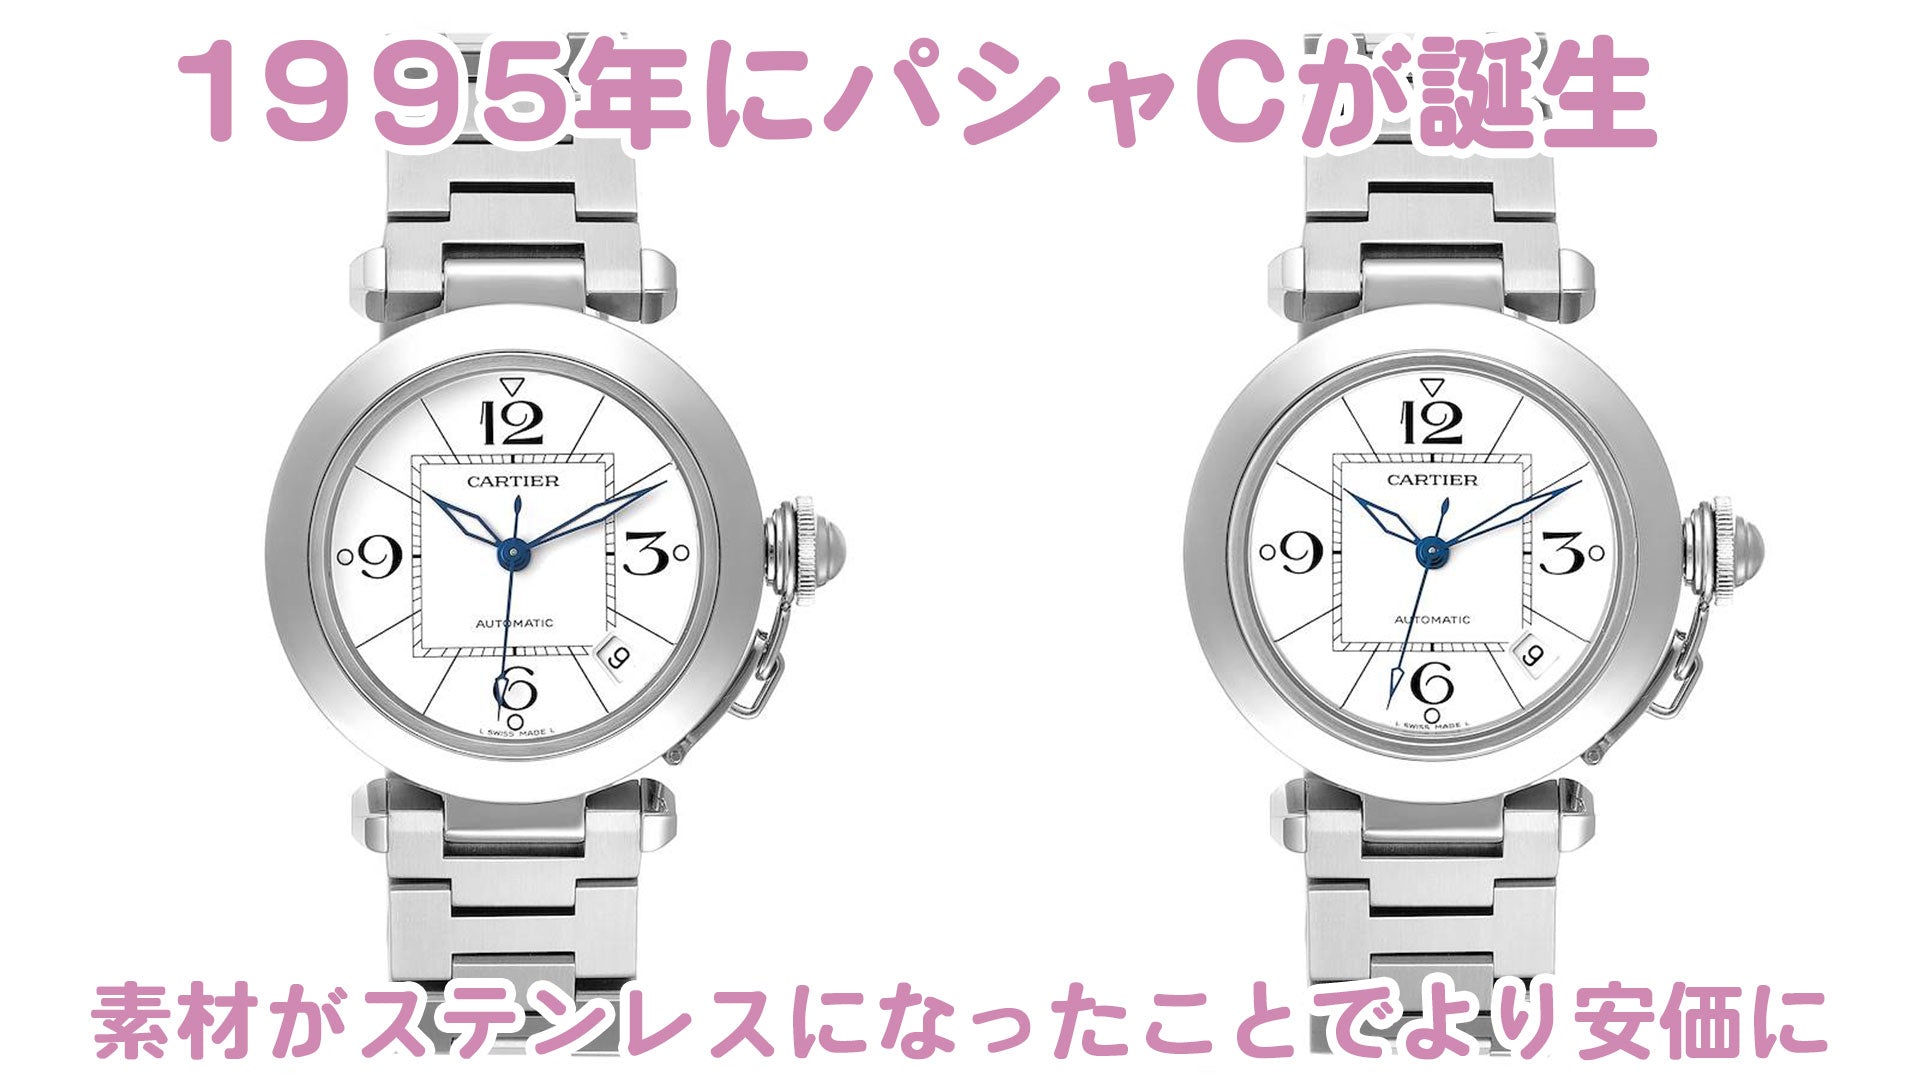 Cartier wristwatch: 1995 Pasha C is born